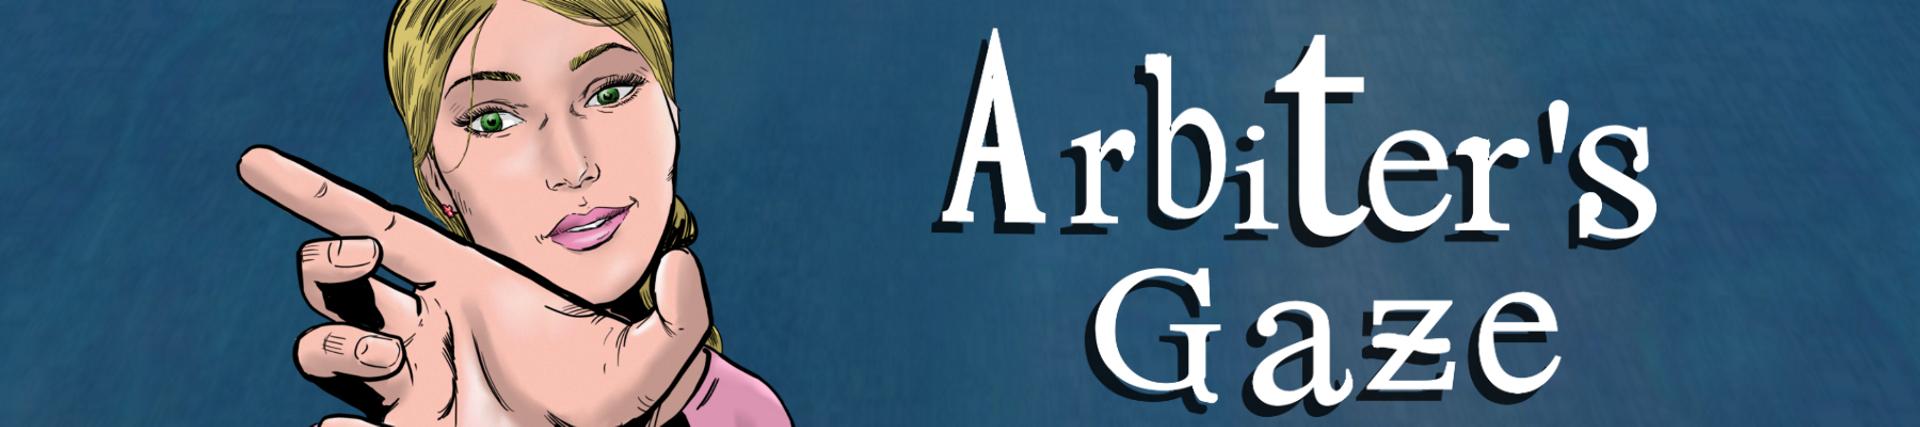 Arbiter's Gaze - Version 0.8 by ProneHouse Studio Win/Mac/Android Porn Game